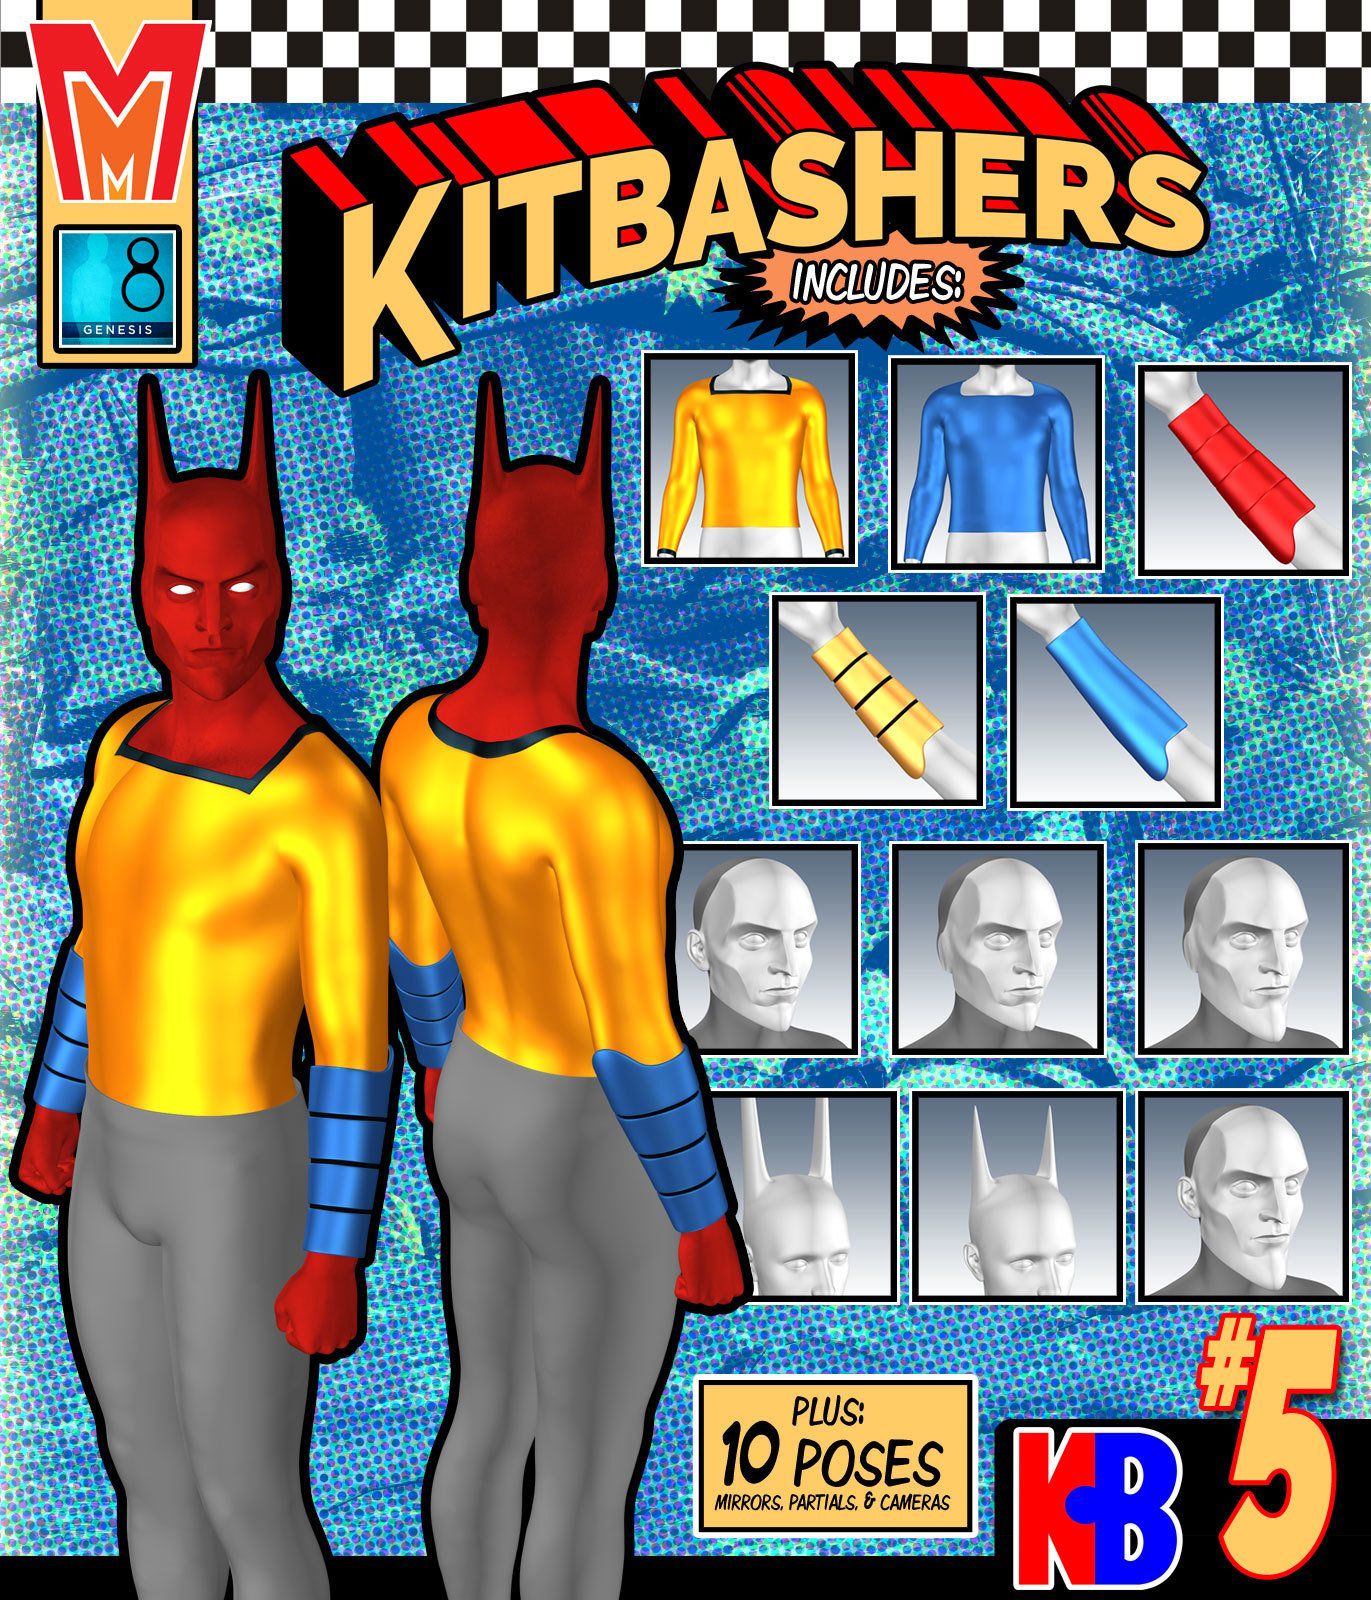 Kitbashers 005 MMG8M by: MightyMite, 3D Models by Daz 3D